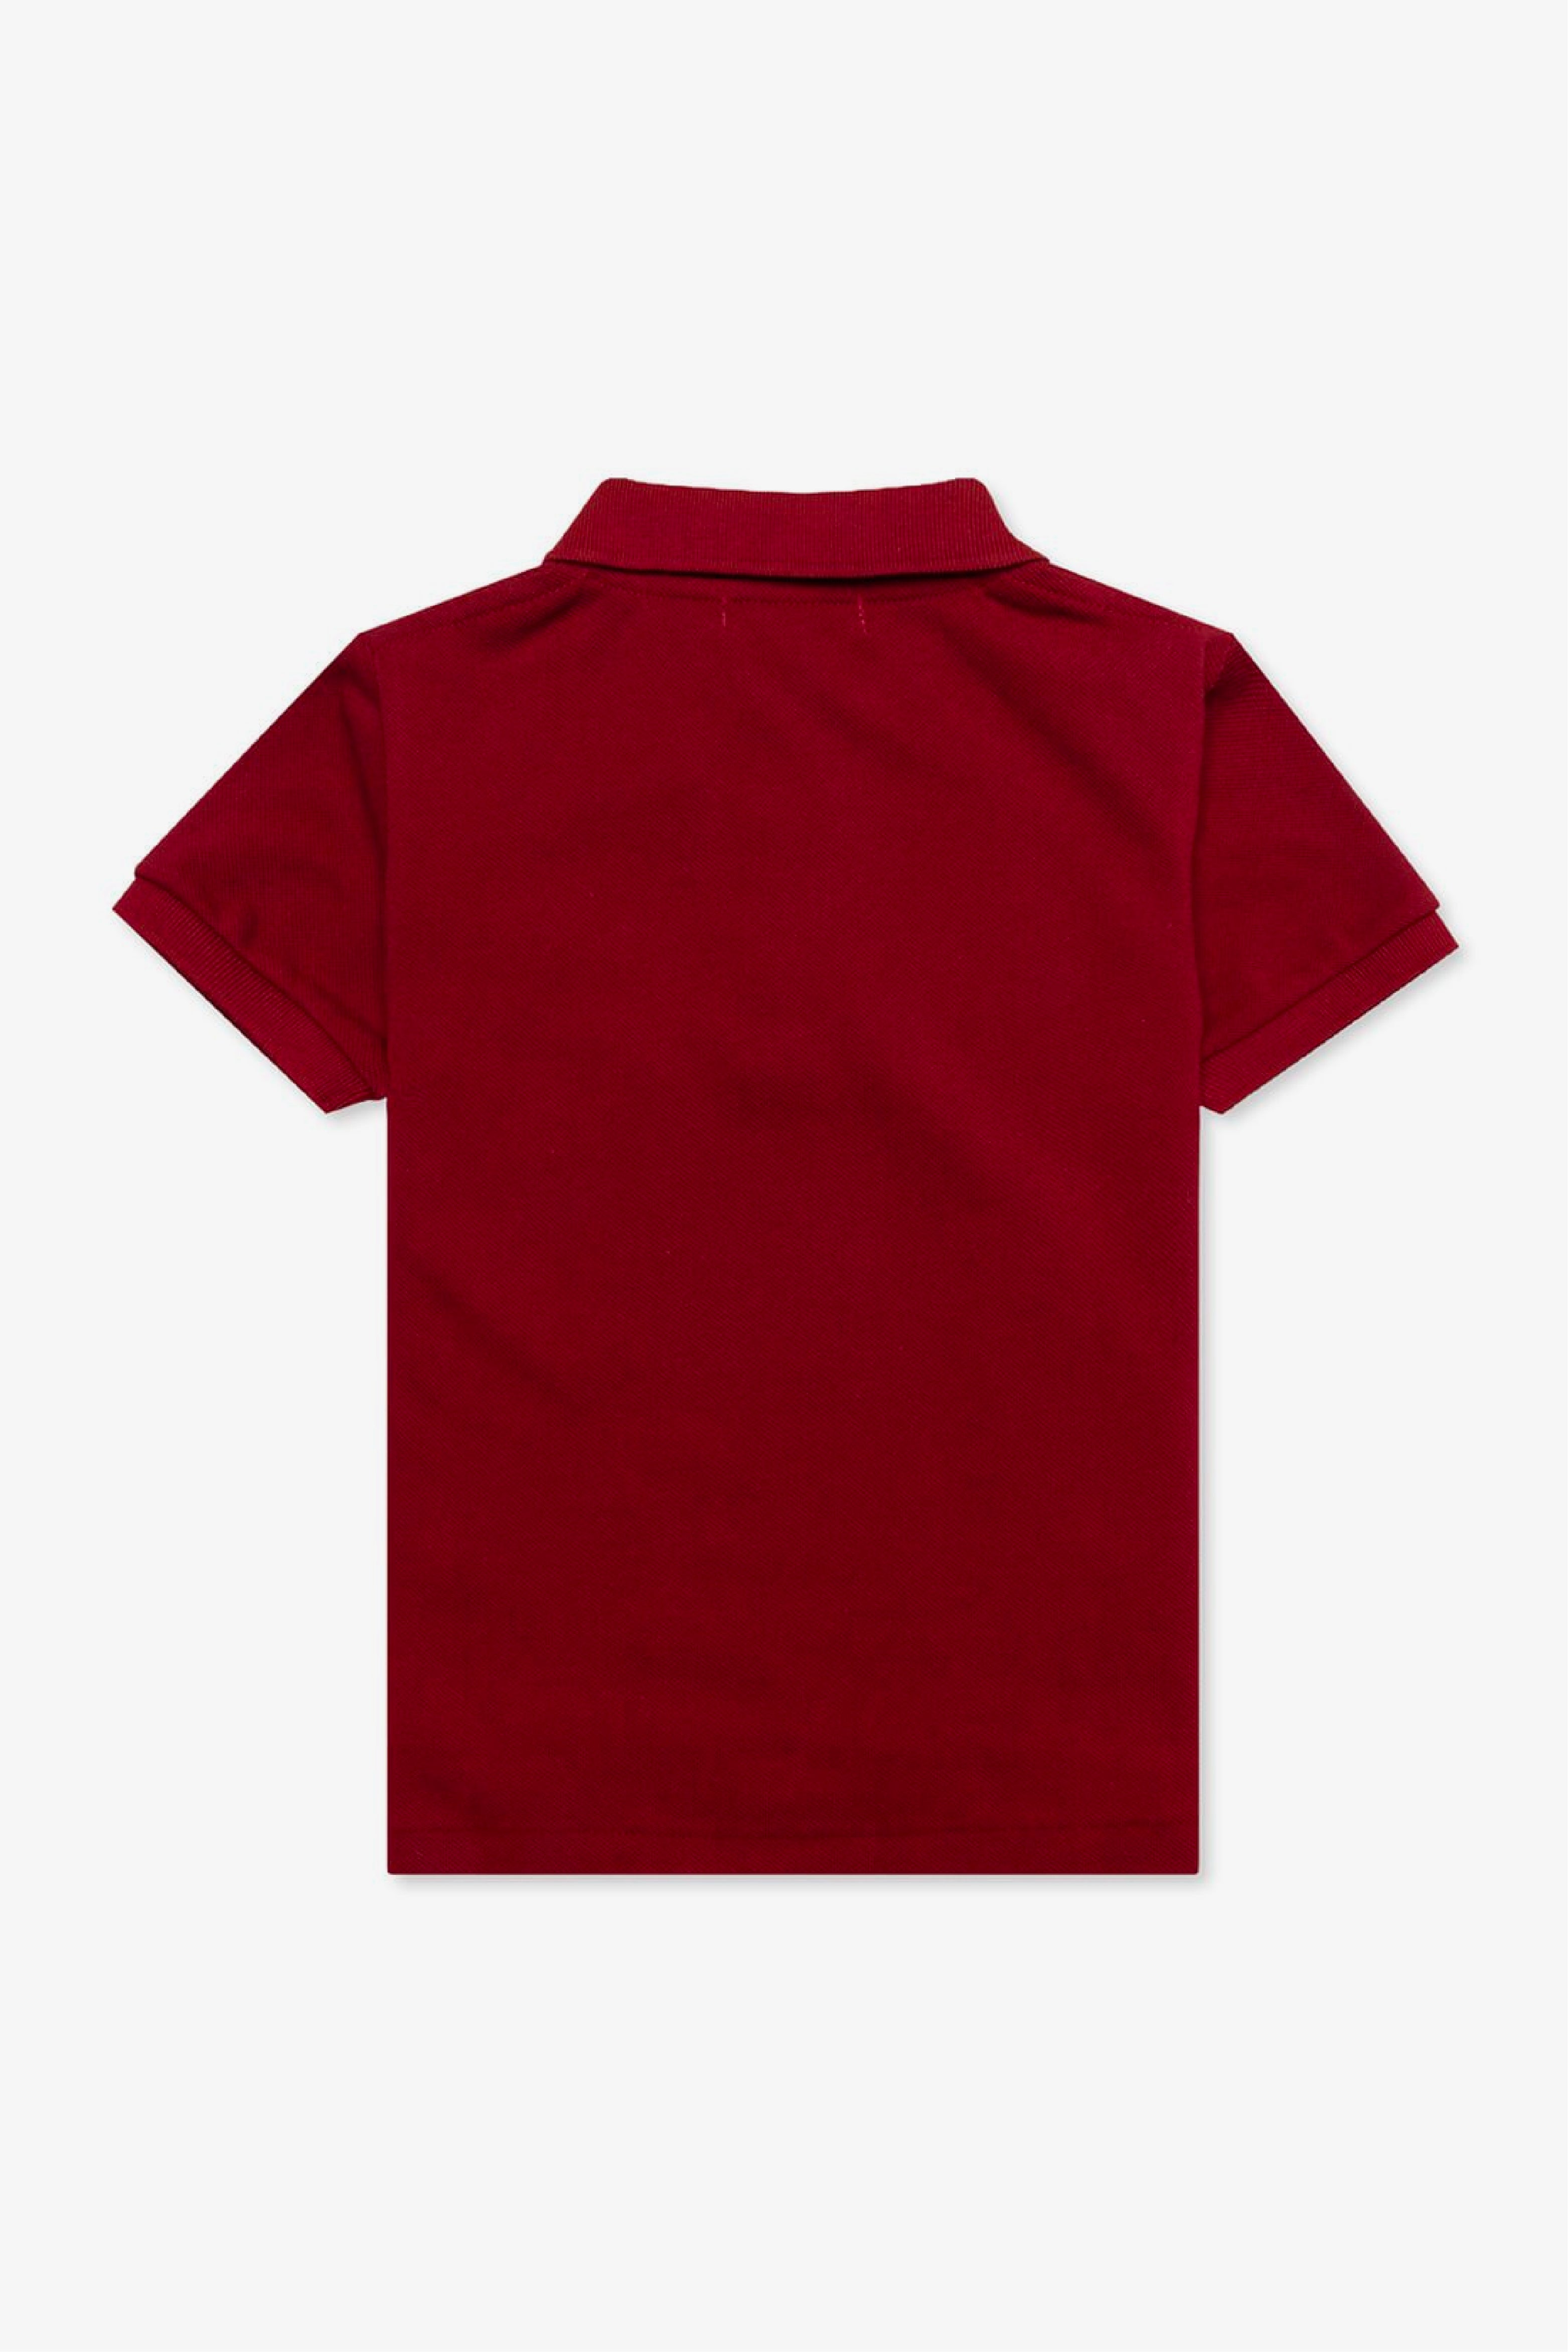 Selectshop FRAME - COMME DES GARCONS PLAY Red Play Shirt (Burgundy) Kids Kids Dubai